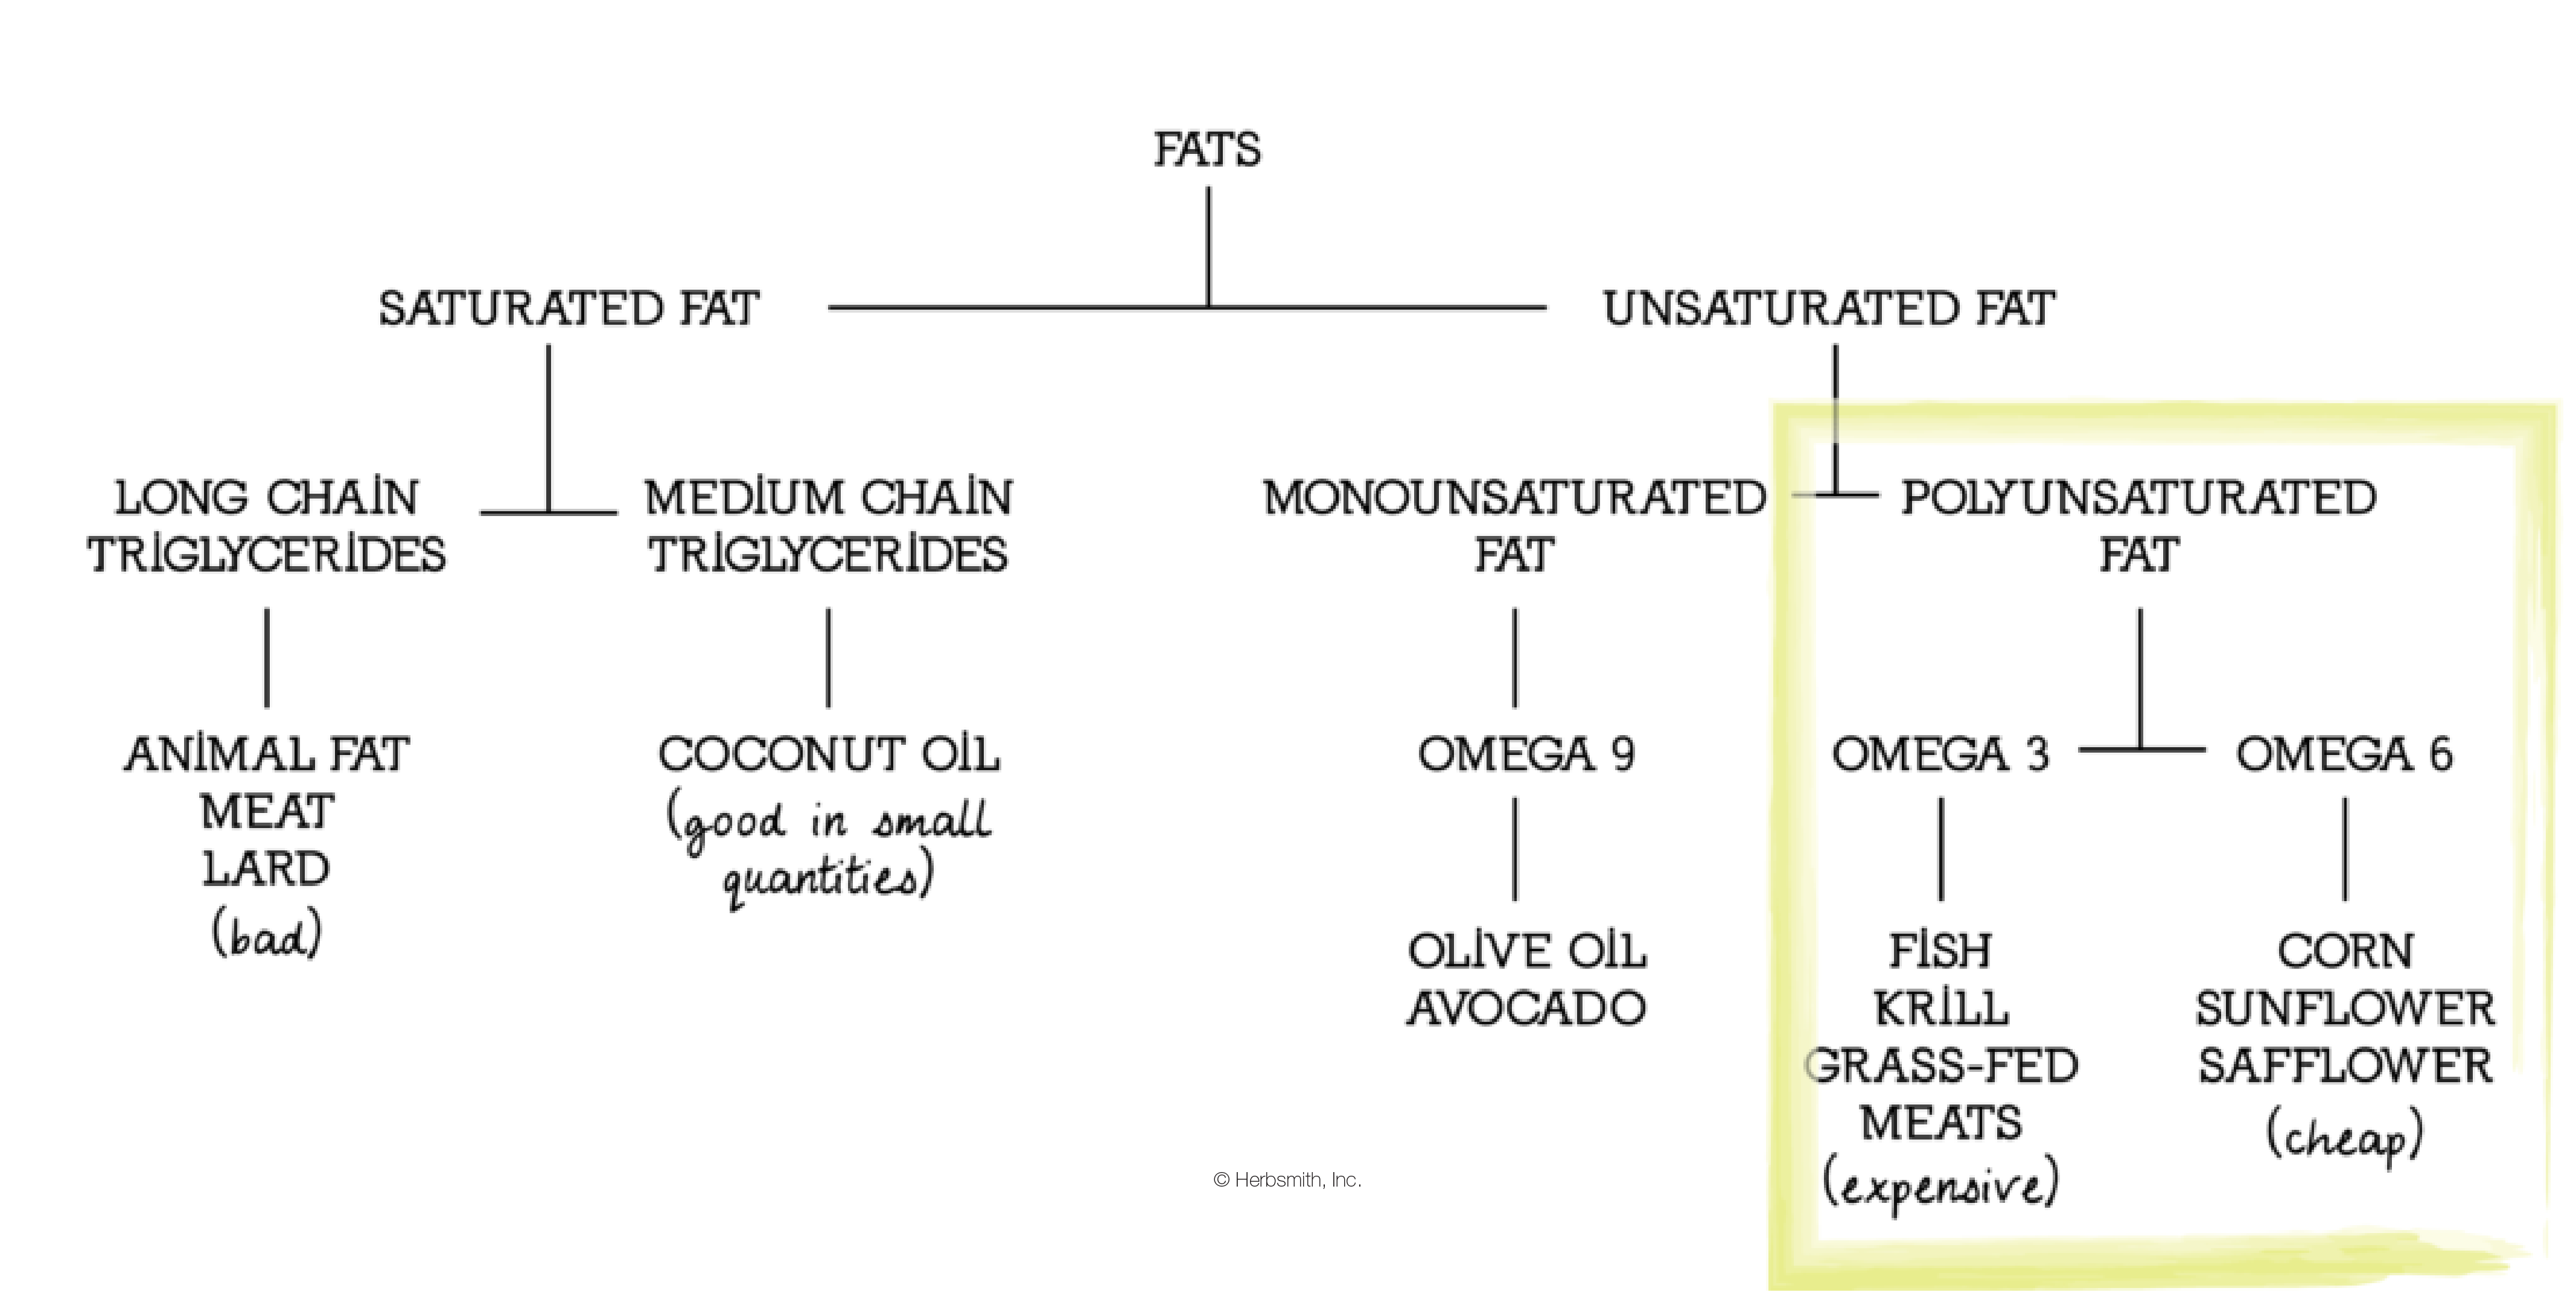 Fat Charts: focus on Omega 3 and Omega 6